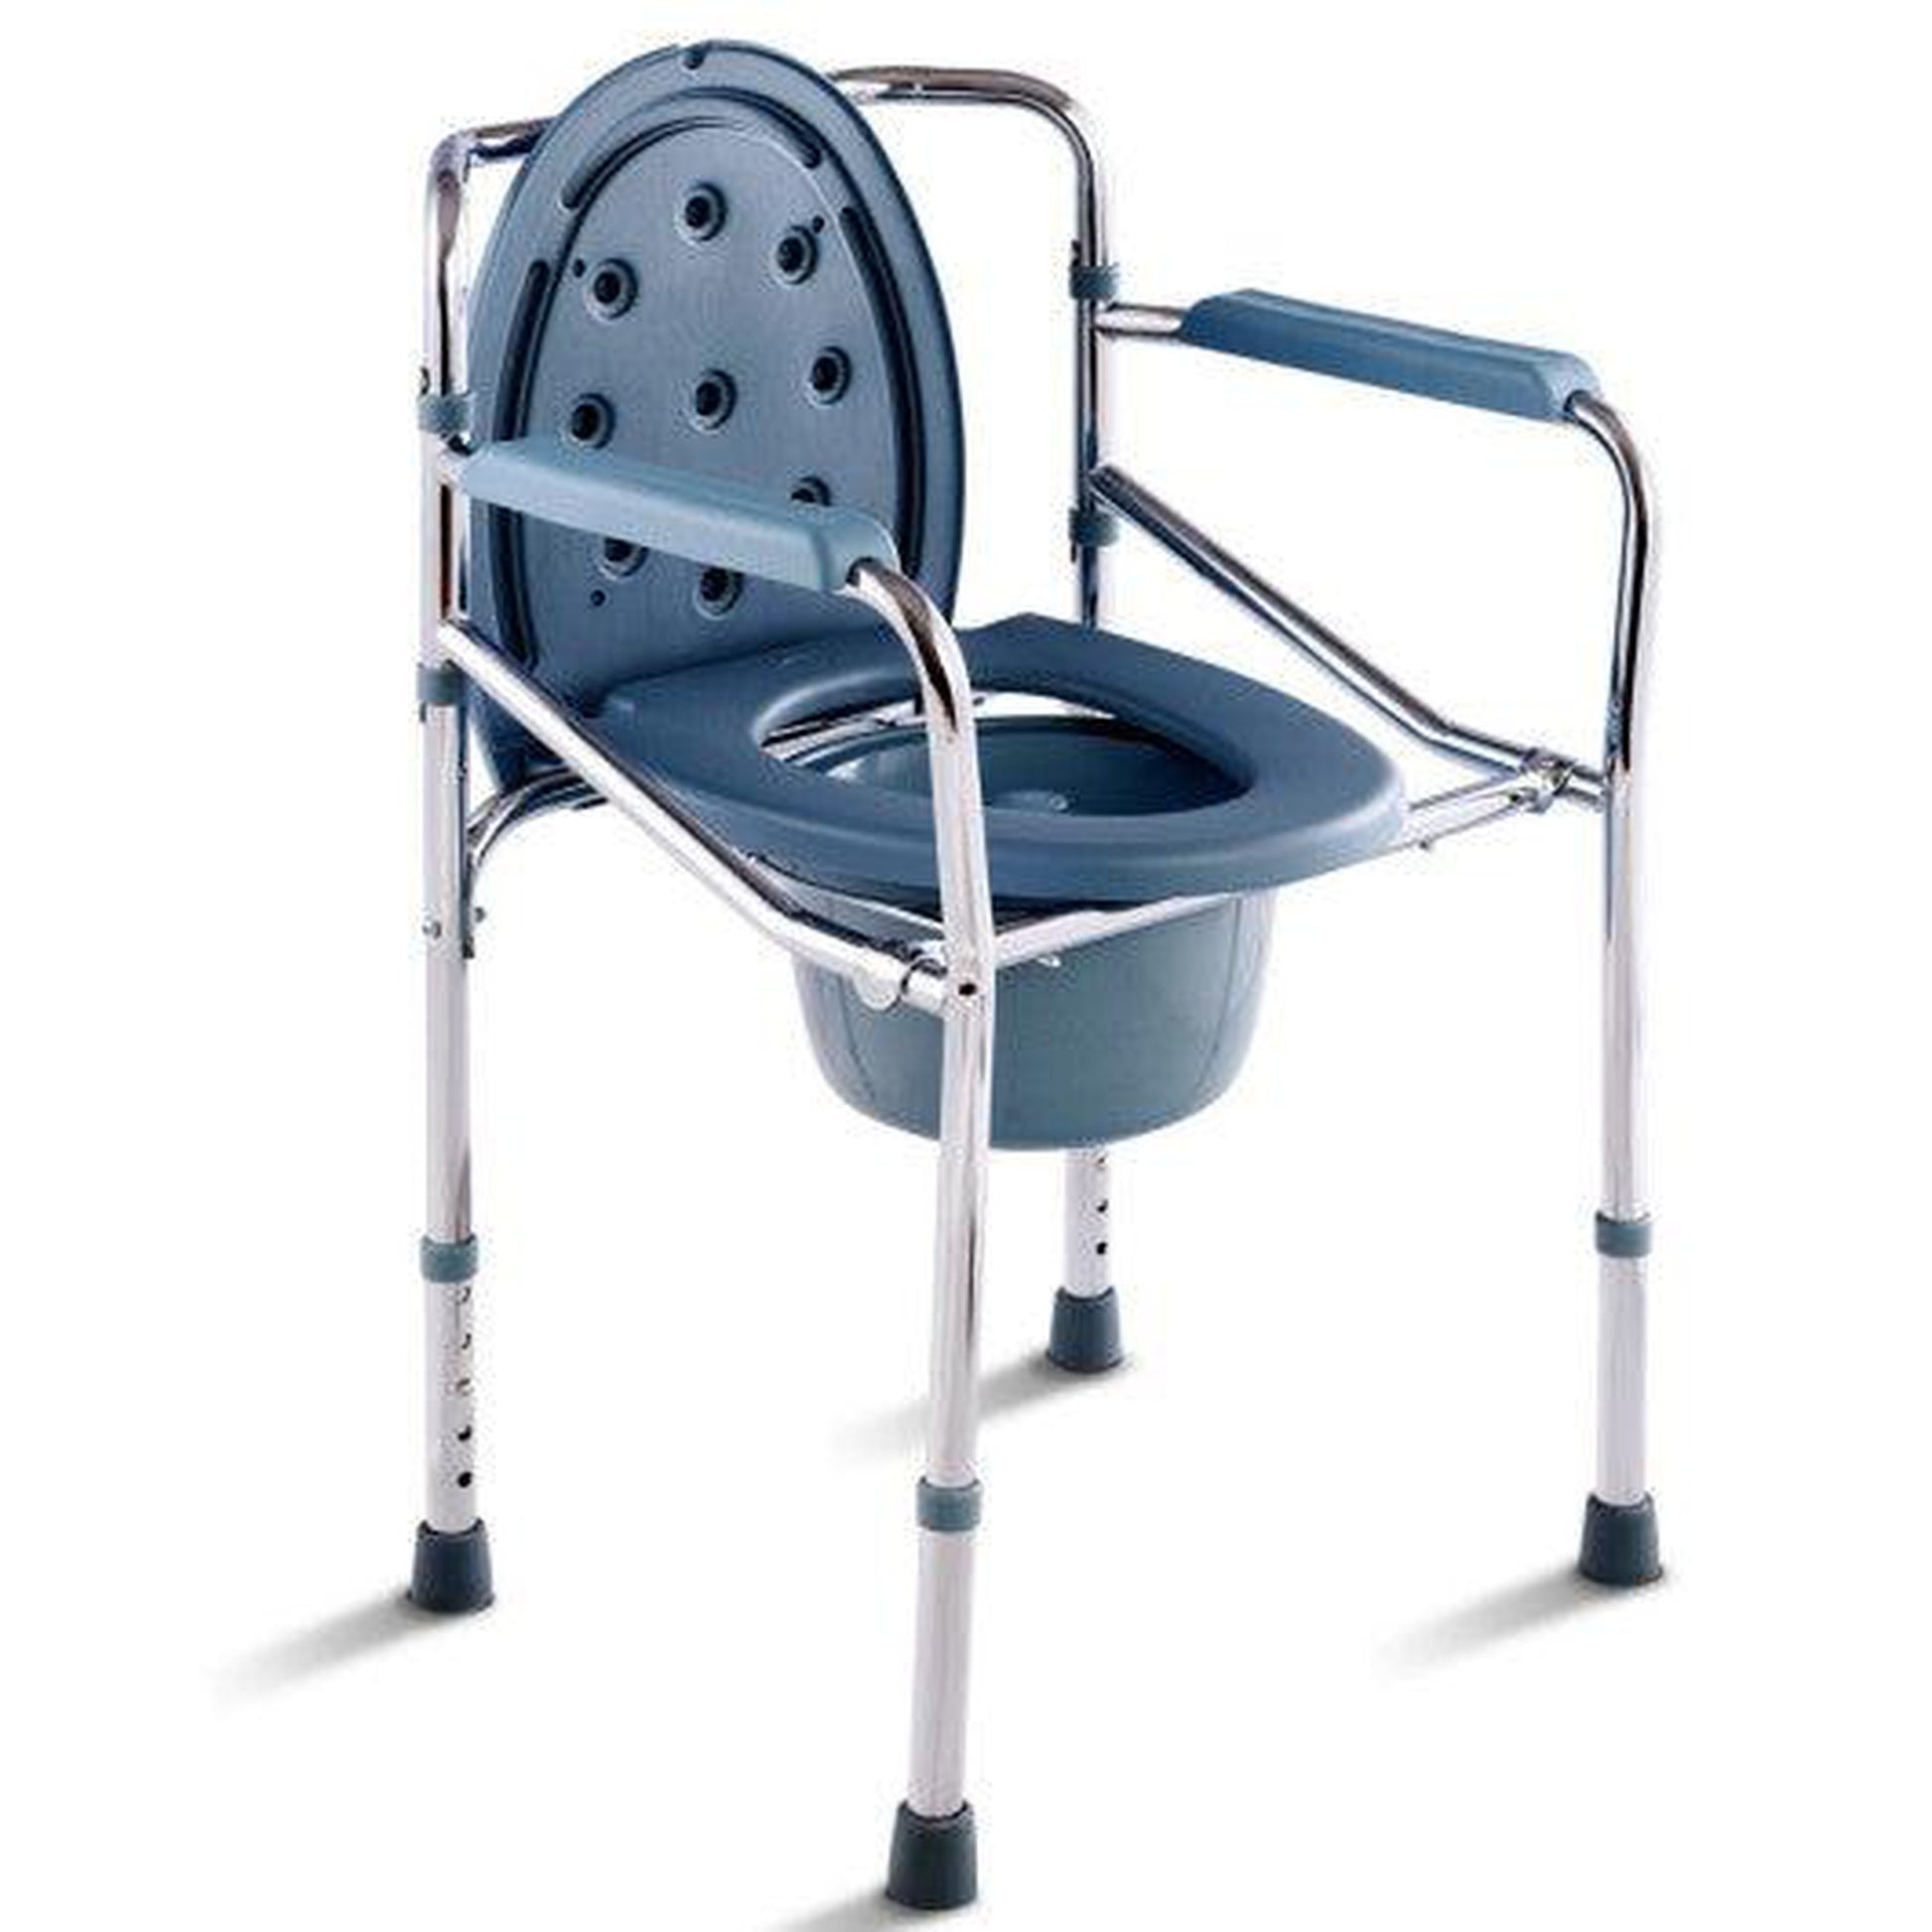 Costway Adjustable Folding Toilet Chair with Bucket Splash Guard